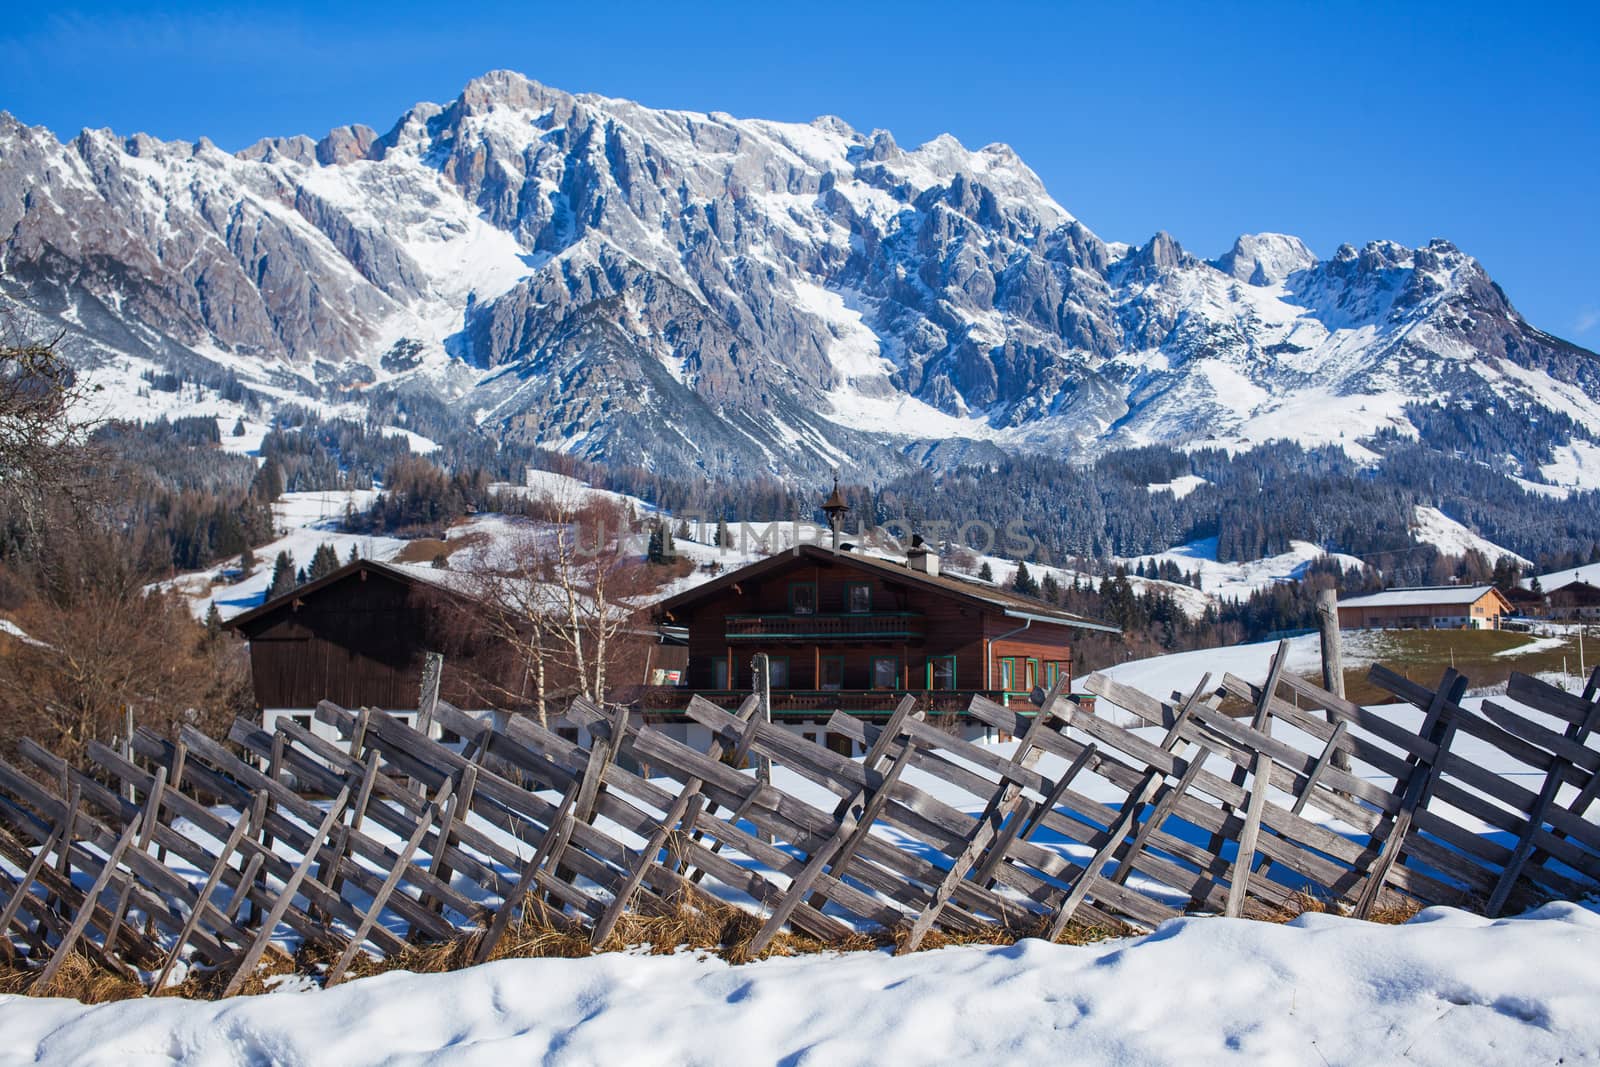 Winter in the Alps, Austria. Horizontal shot